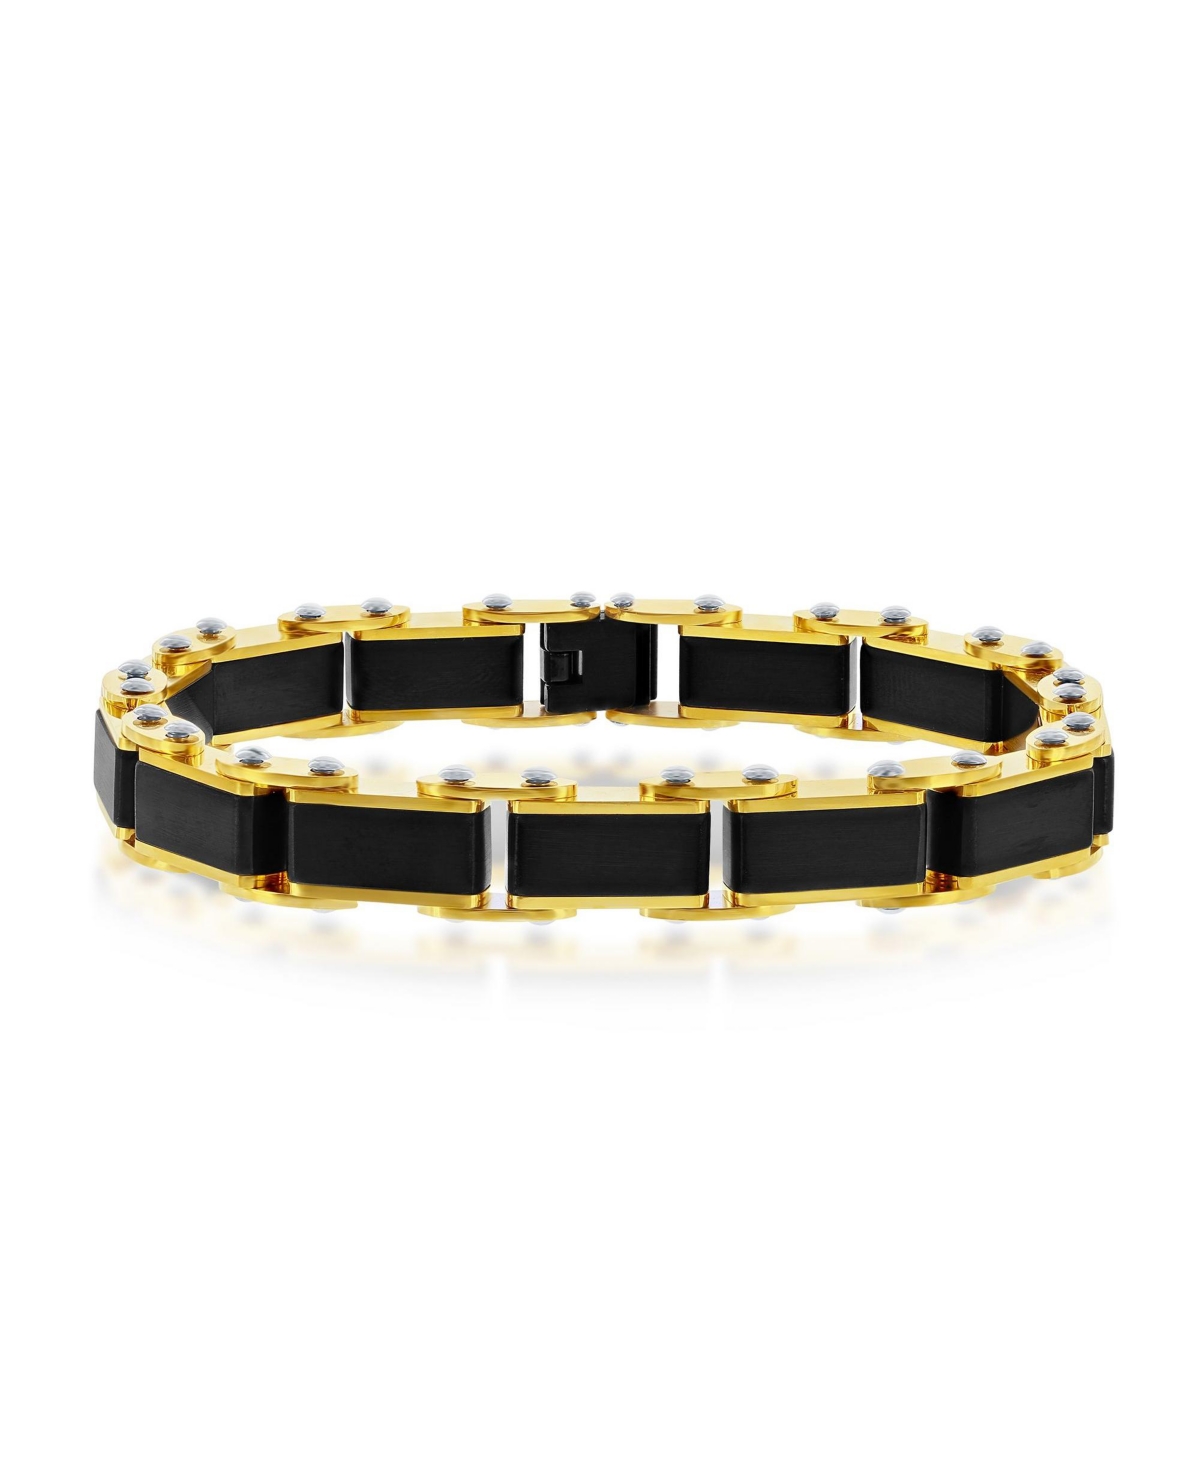 Stainless Steel Industrial Link Bracelet - Black  gold